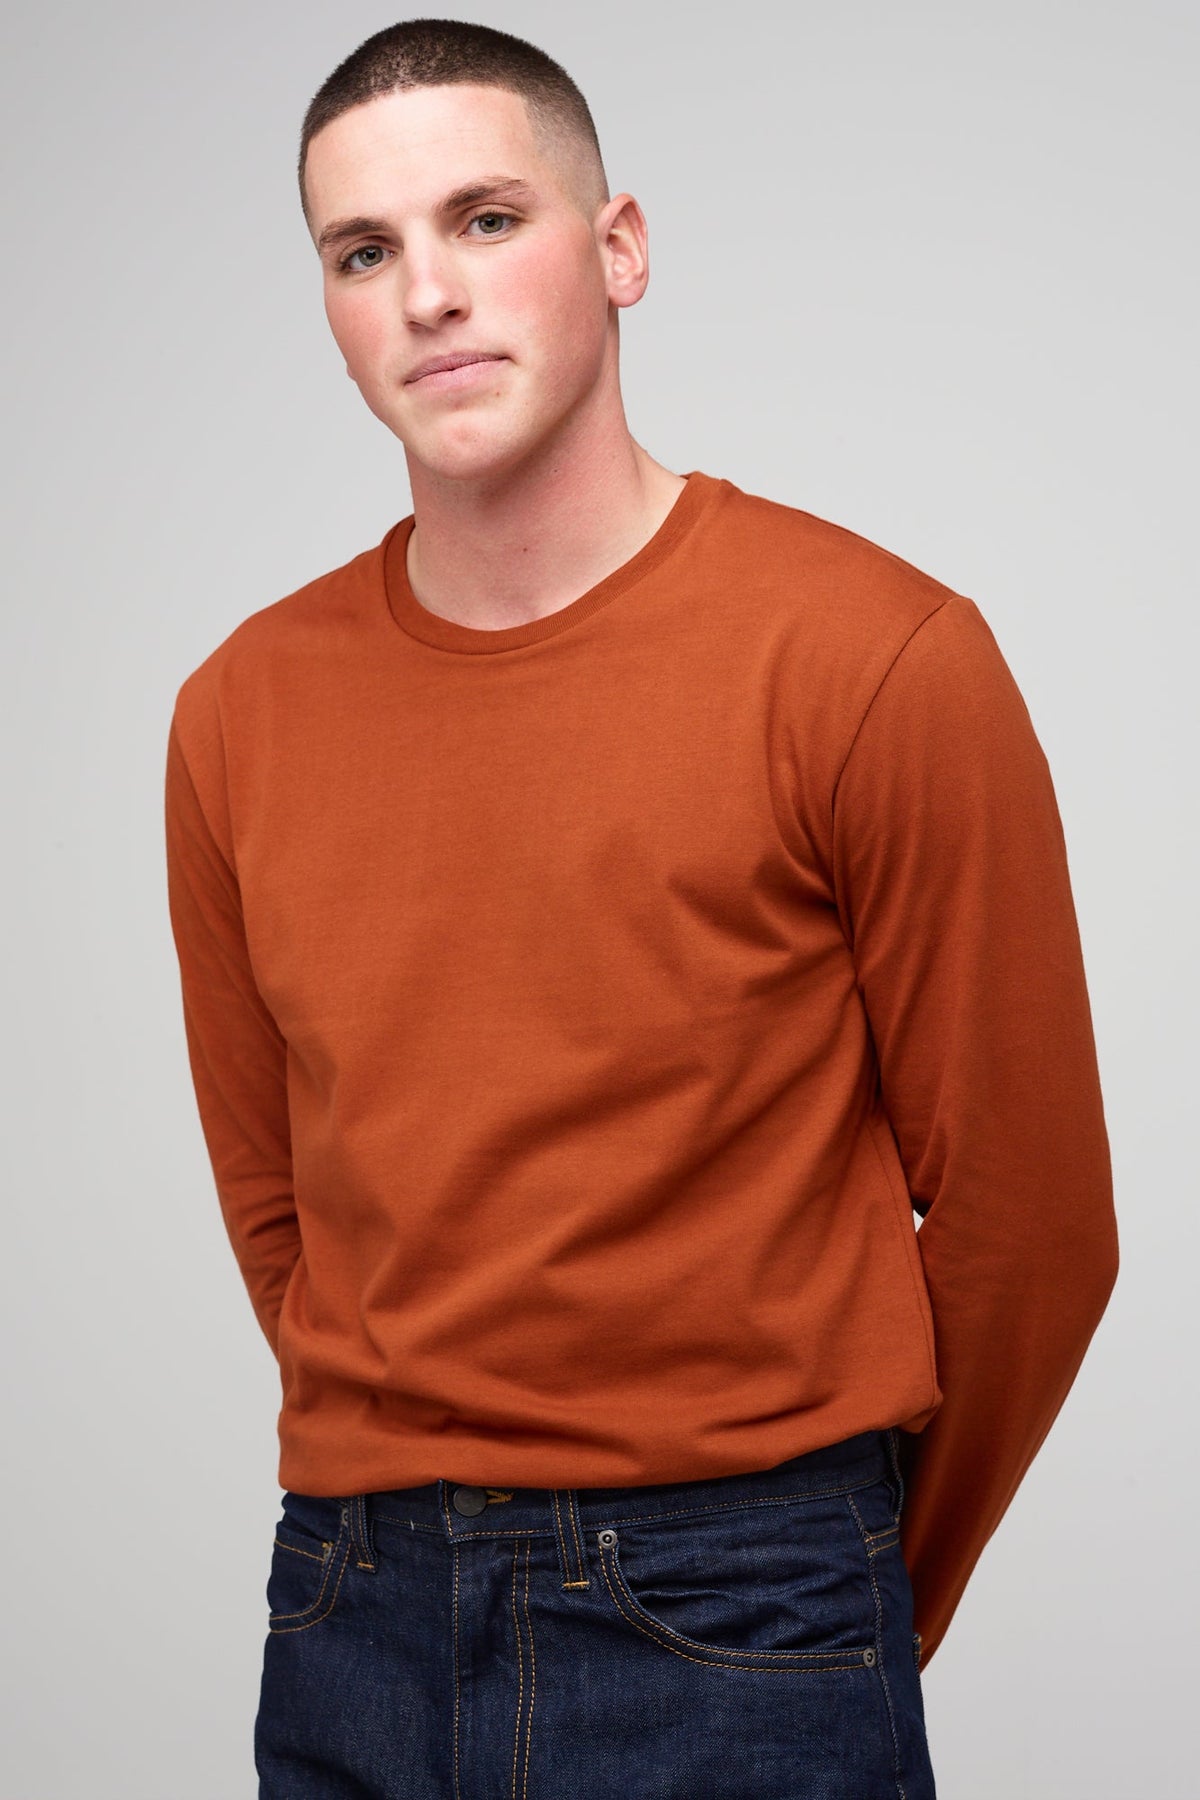 
            Brunete, white male wearing long sleeve t-shirt in cinnamon tucked into denim jeans